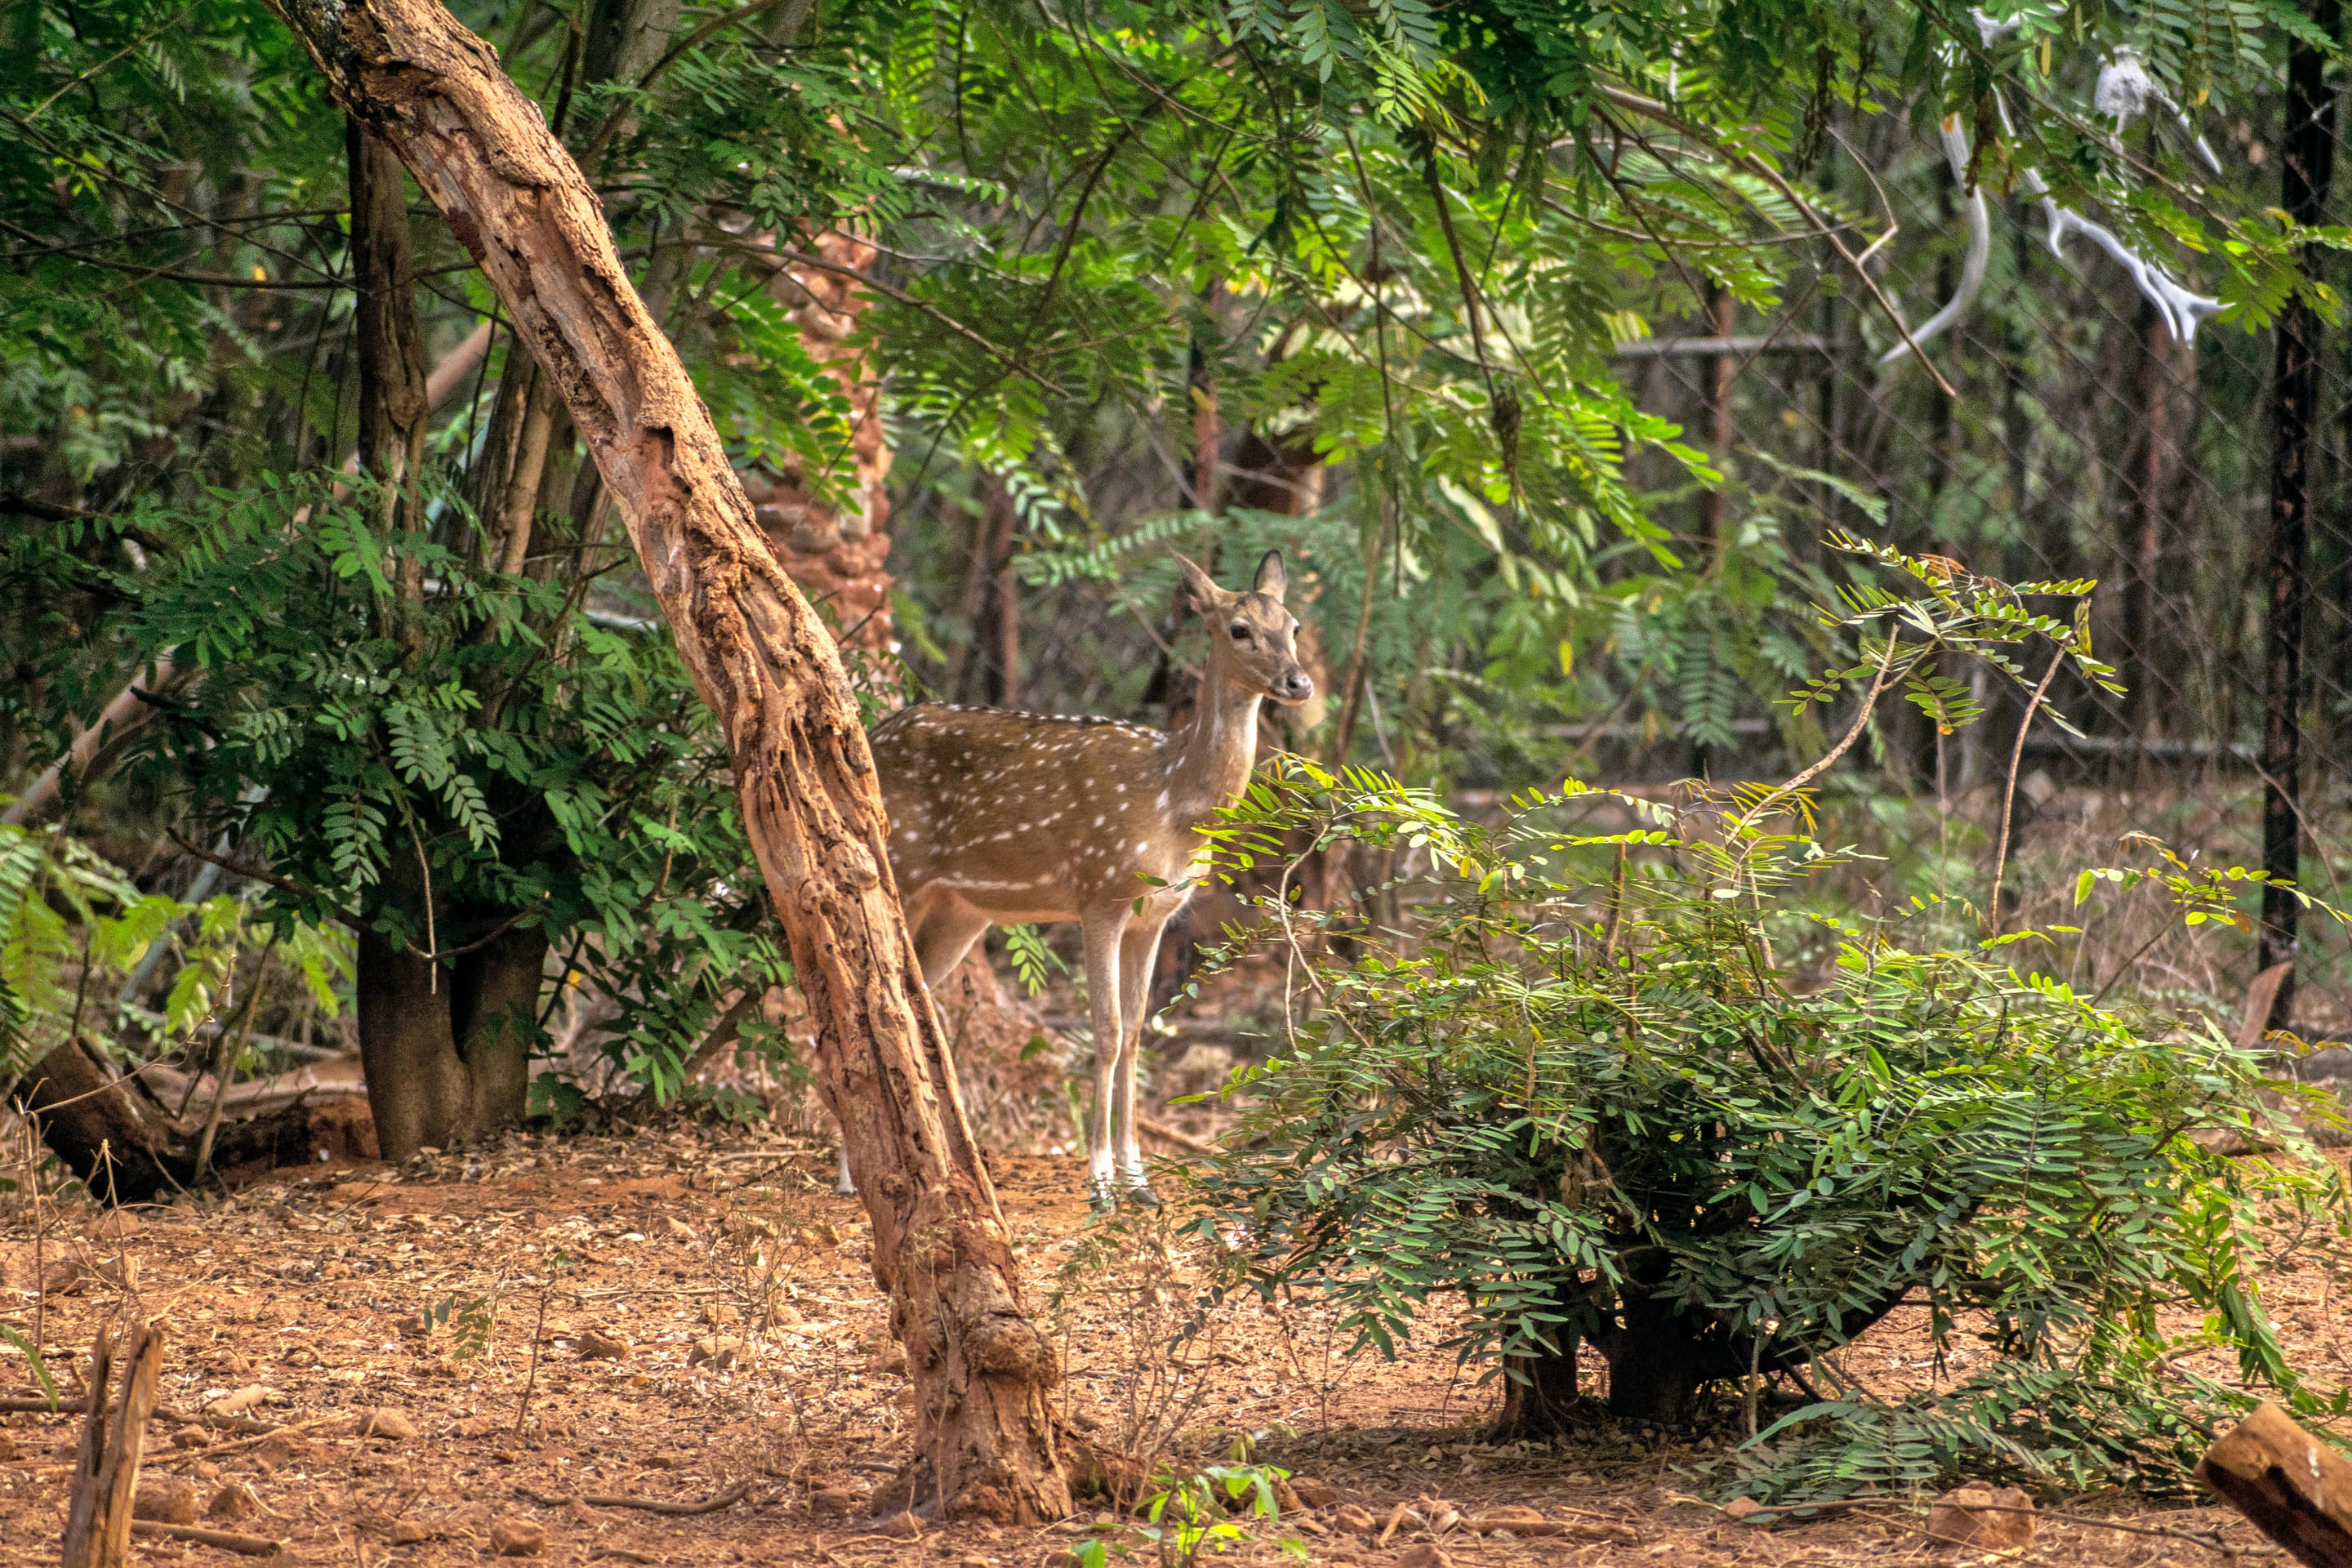 Indira Gandhi Wildlife Sanctuary And National Park Overview